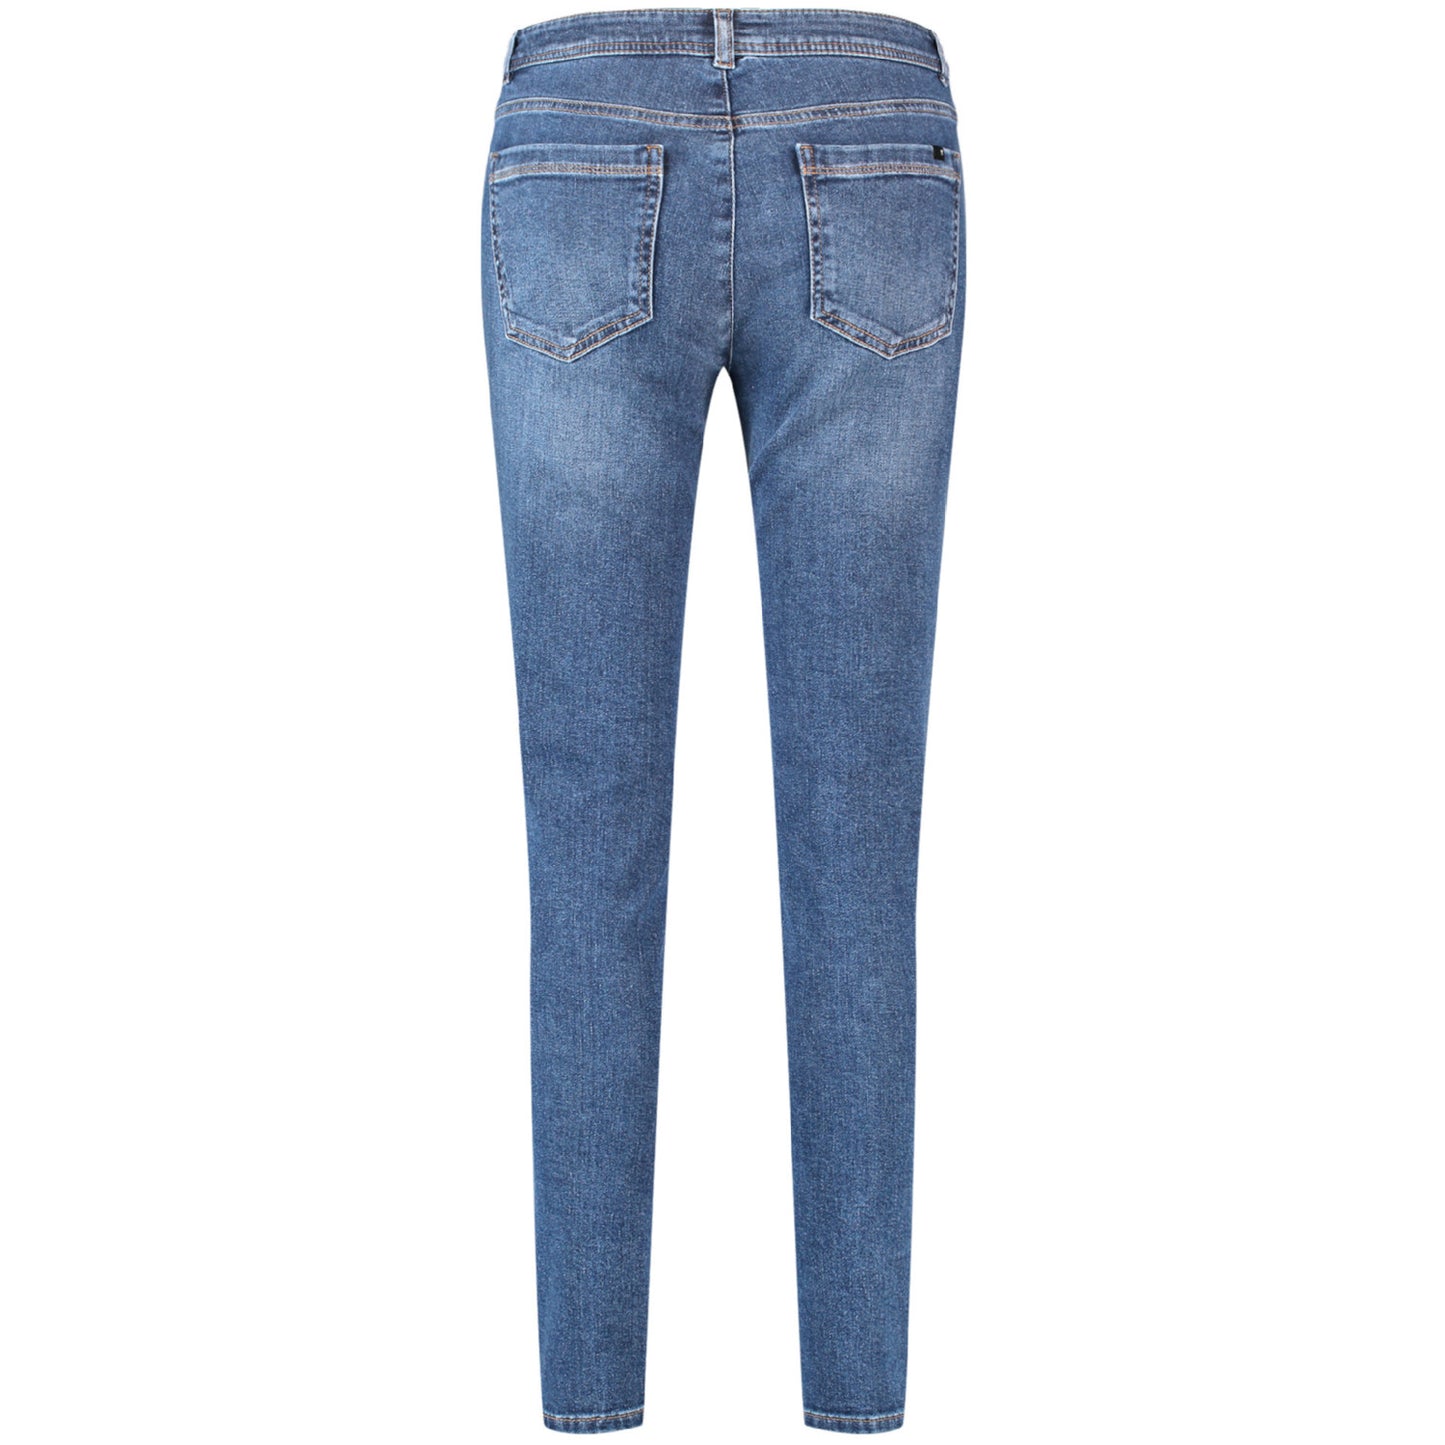 Taifun 920987 19059 8989 Dark Blue Denim Cropped Jeans